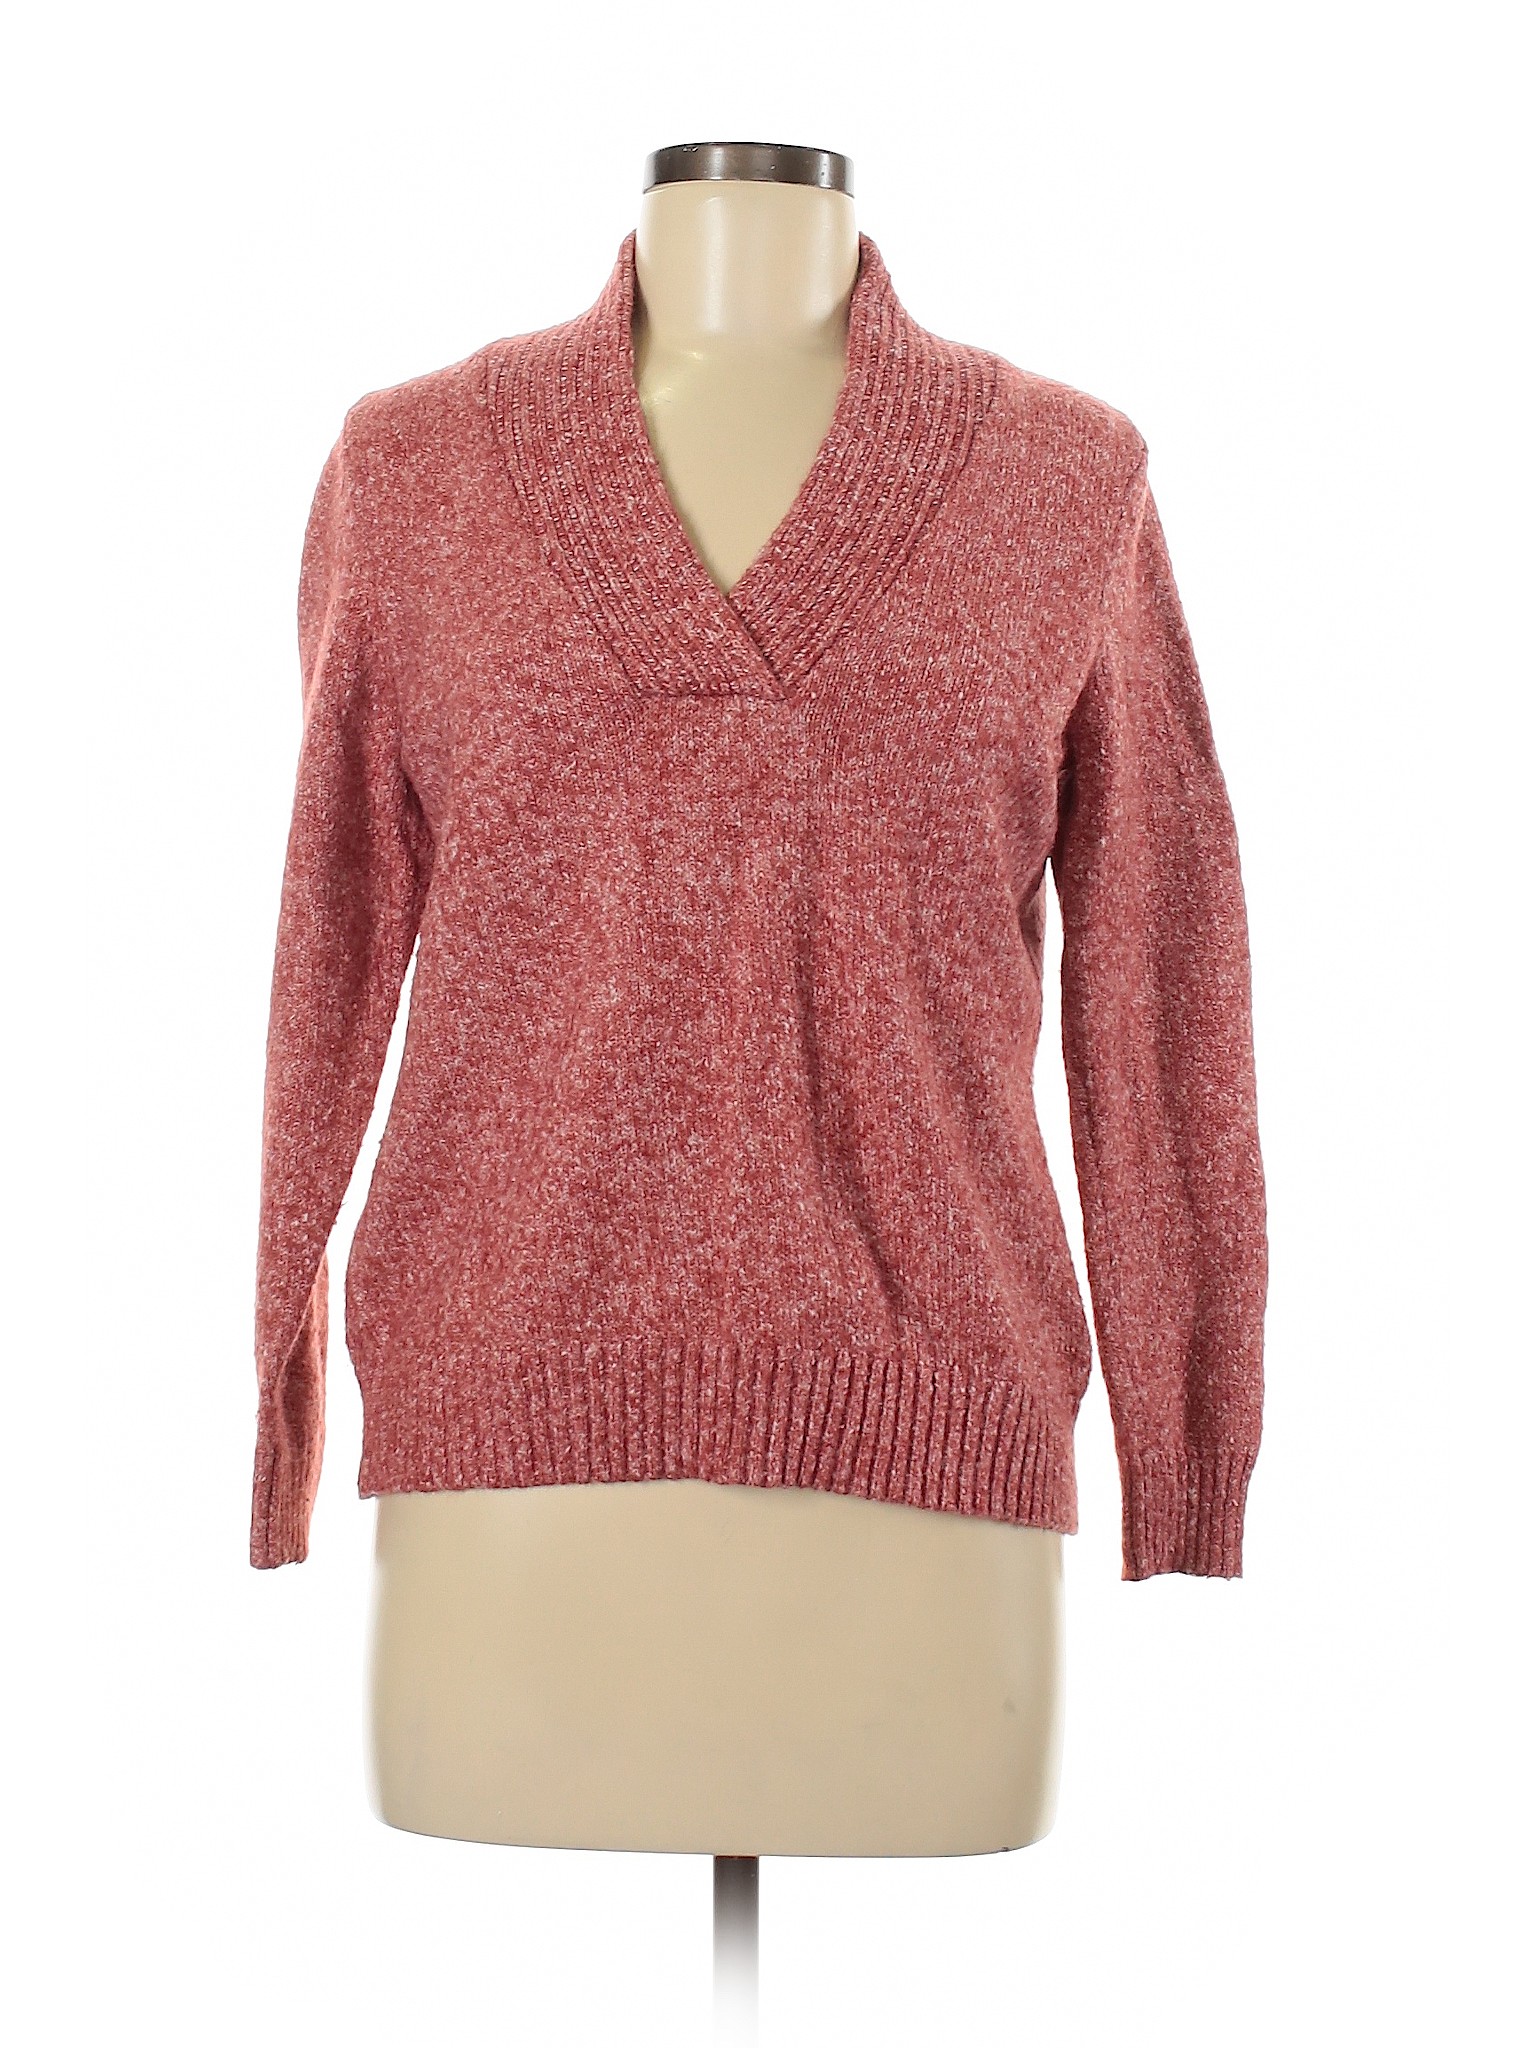 Croft & Barrow Women Orange Pullover Sweater M | eBay